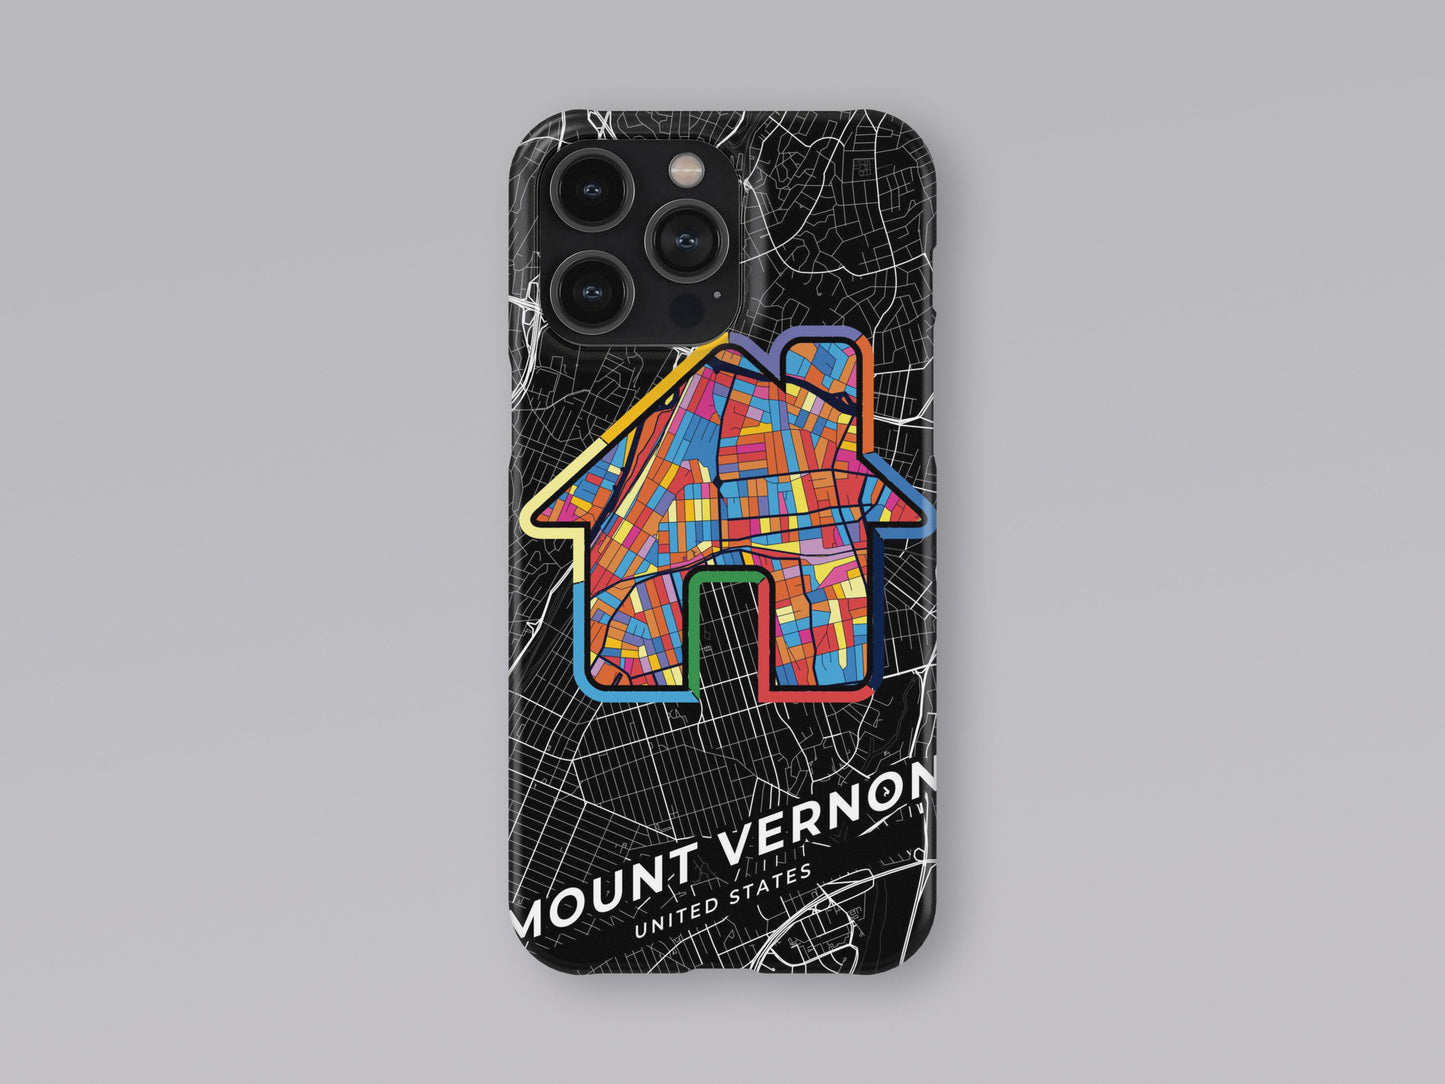 Mount Vernon New York slim phone case with colorful icon 3